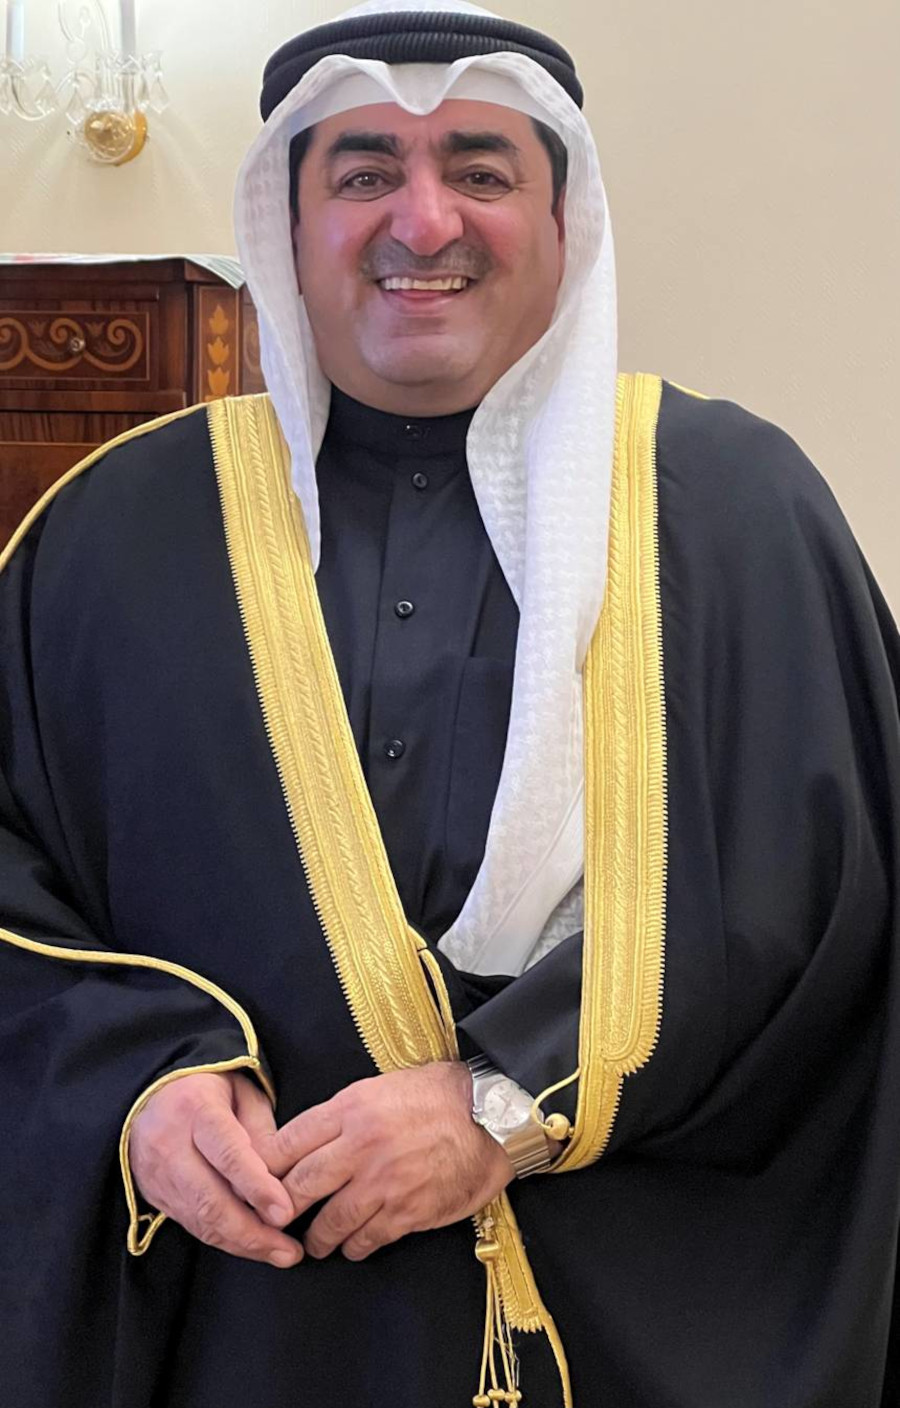 H.E. Saad Abdullah Al Asousi, Ambassador of the State of Kuwait